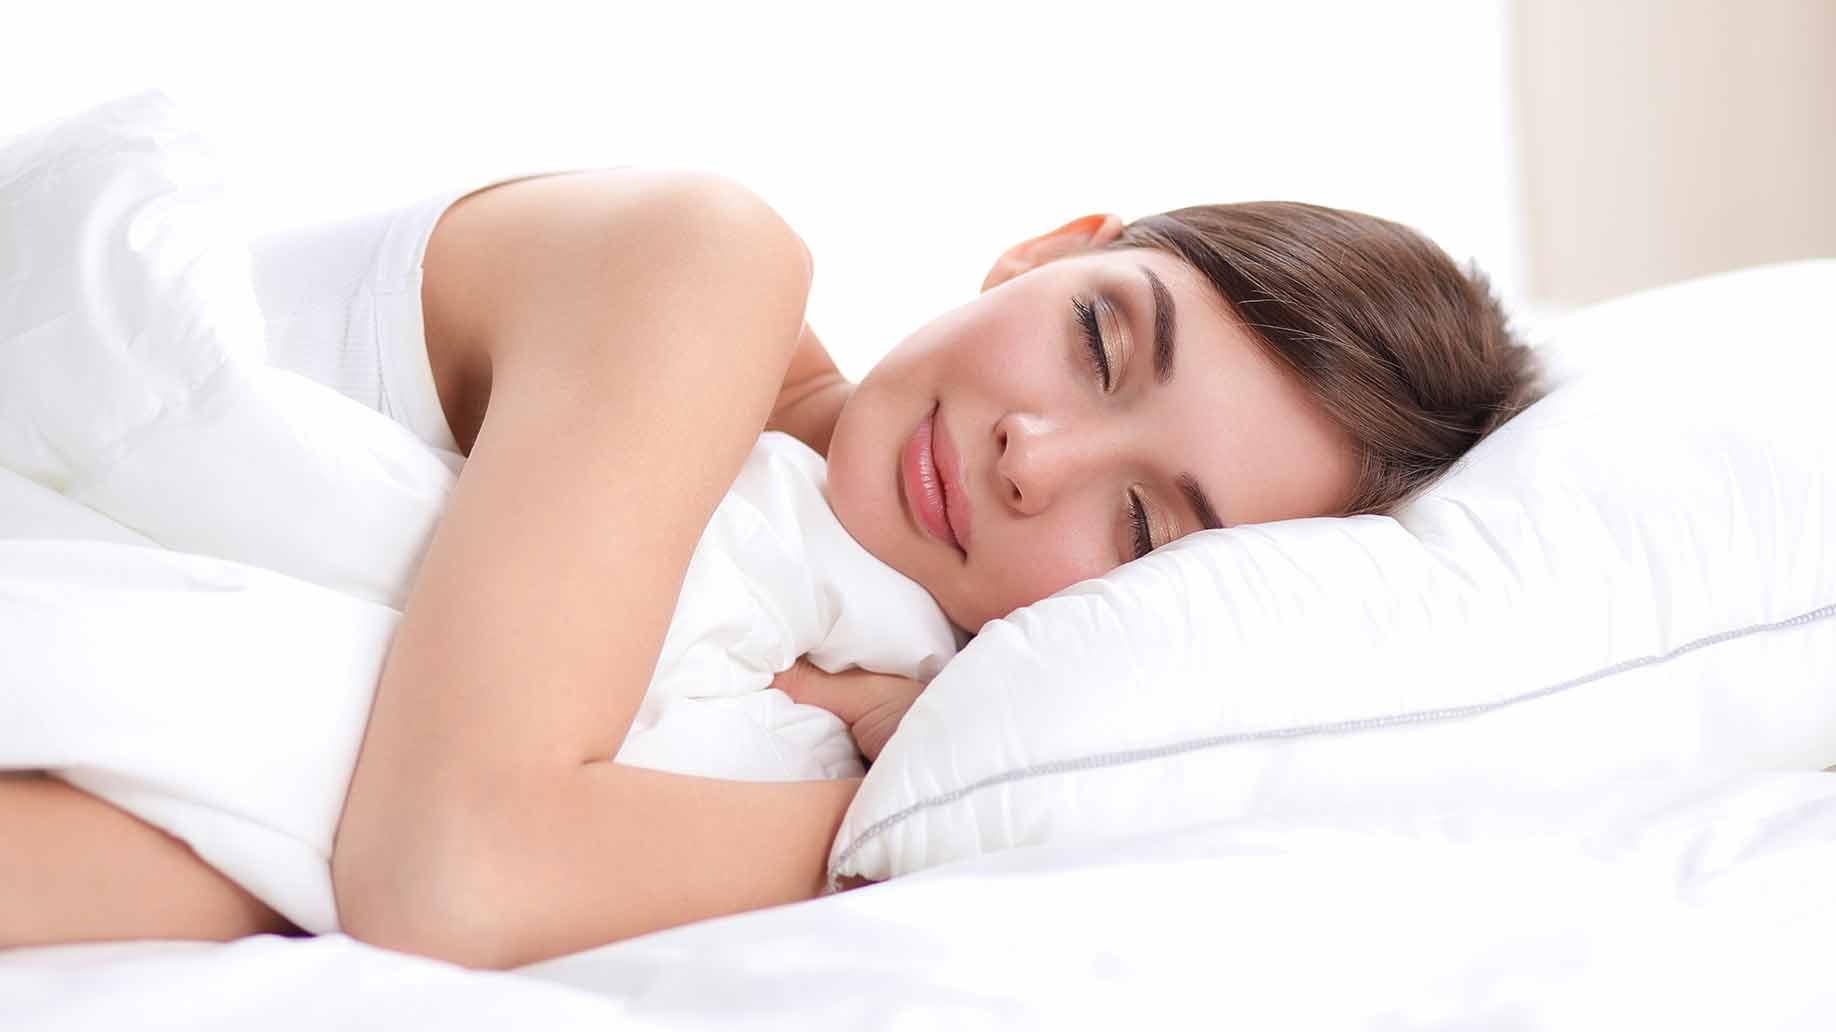 sleep better naturally natural remedies diy